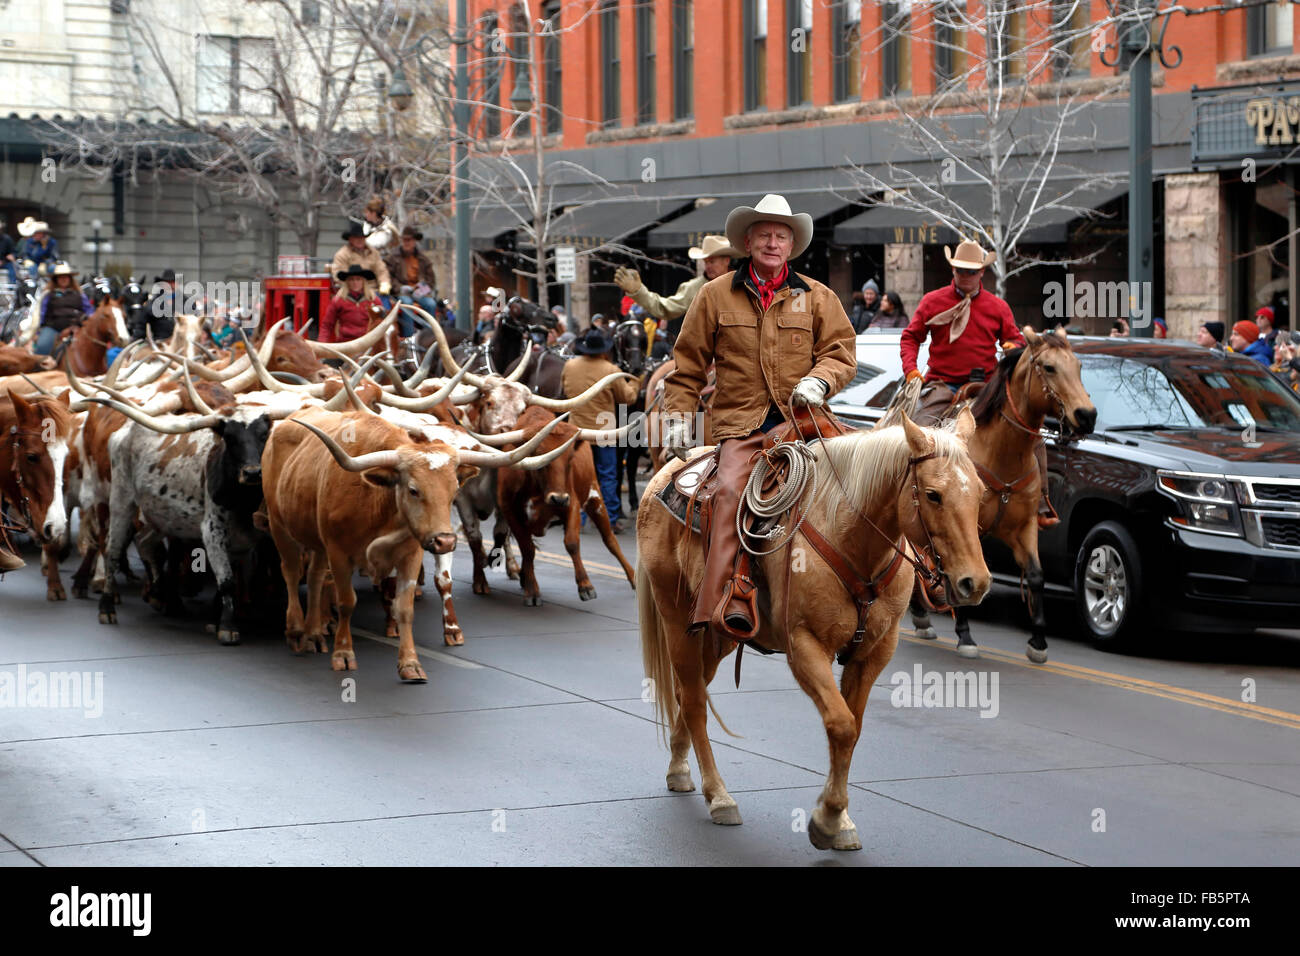 Longhorns herded by cowboys, National Western Stock Show Kick-Off Parade, Denver, Colorado USA Stock Photo